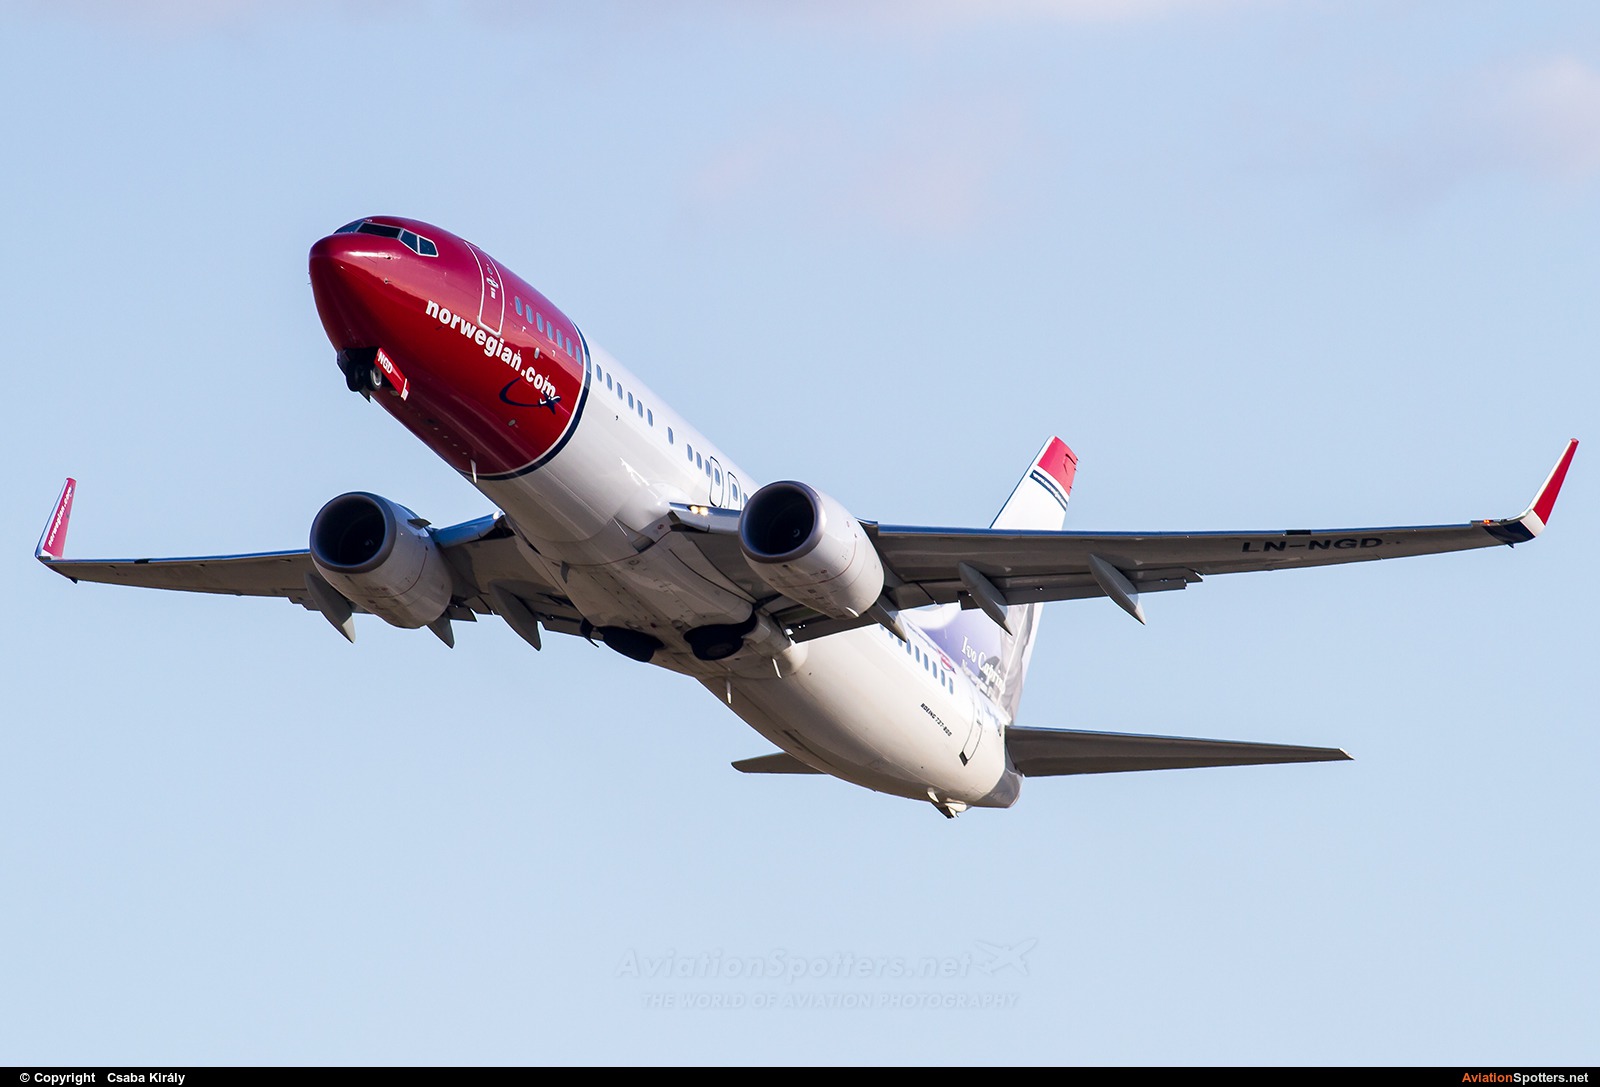 Norwegian Air Shuttle  -  737-800  (LN-NGD) By Csaba Király (Csaba Kiraly)